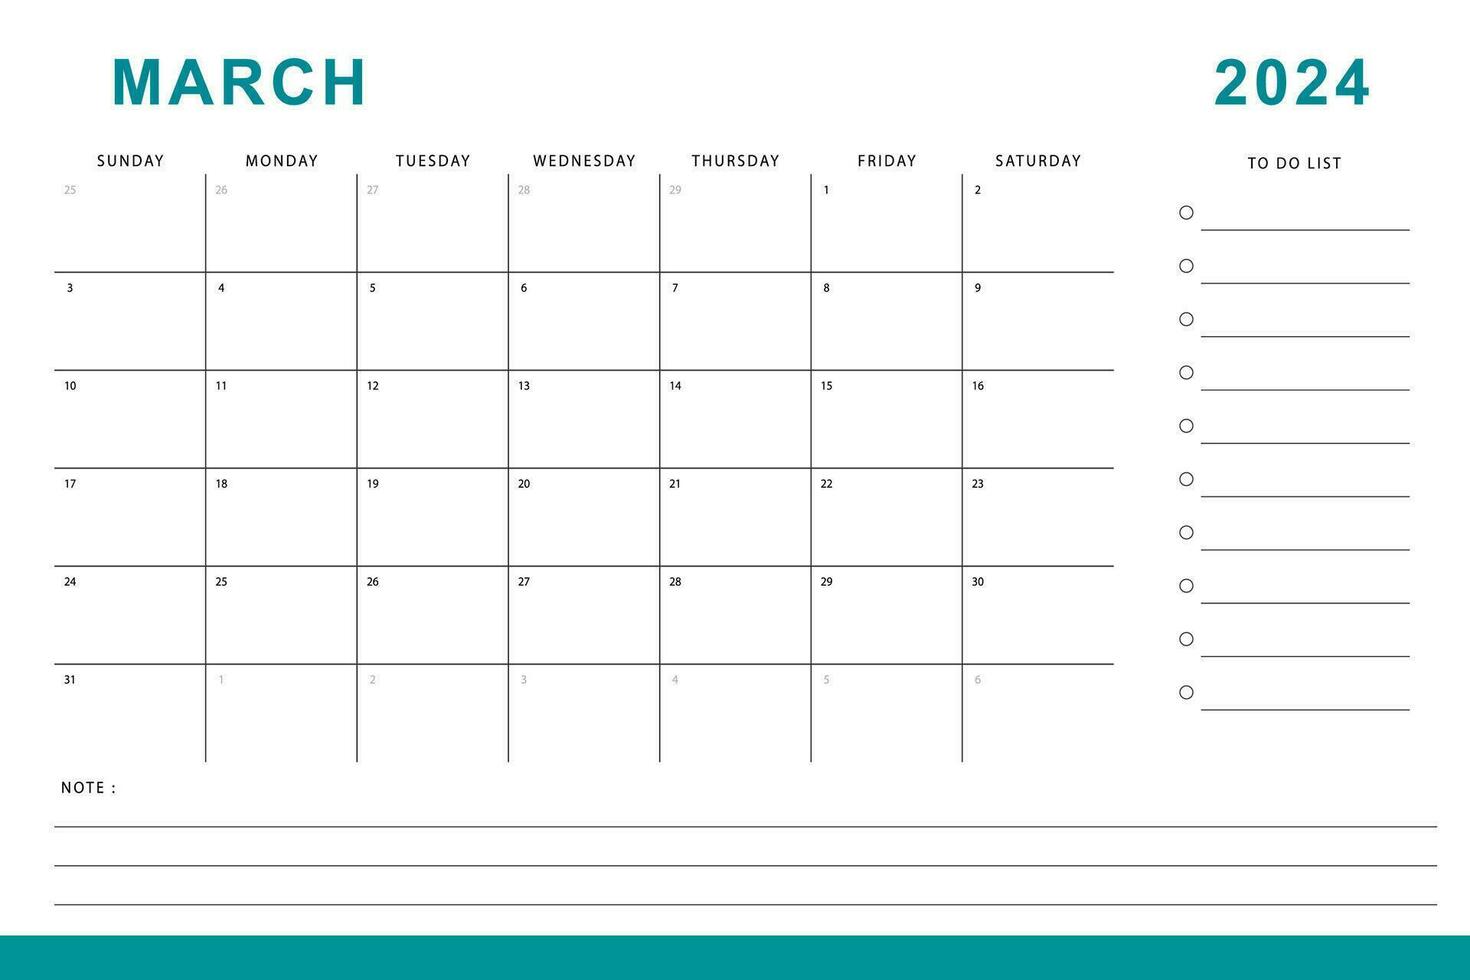 March 2024 calendar. Monthly planner template. Sunday start. Vector design